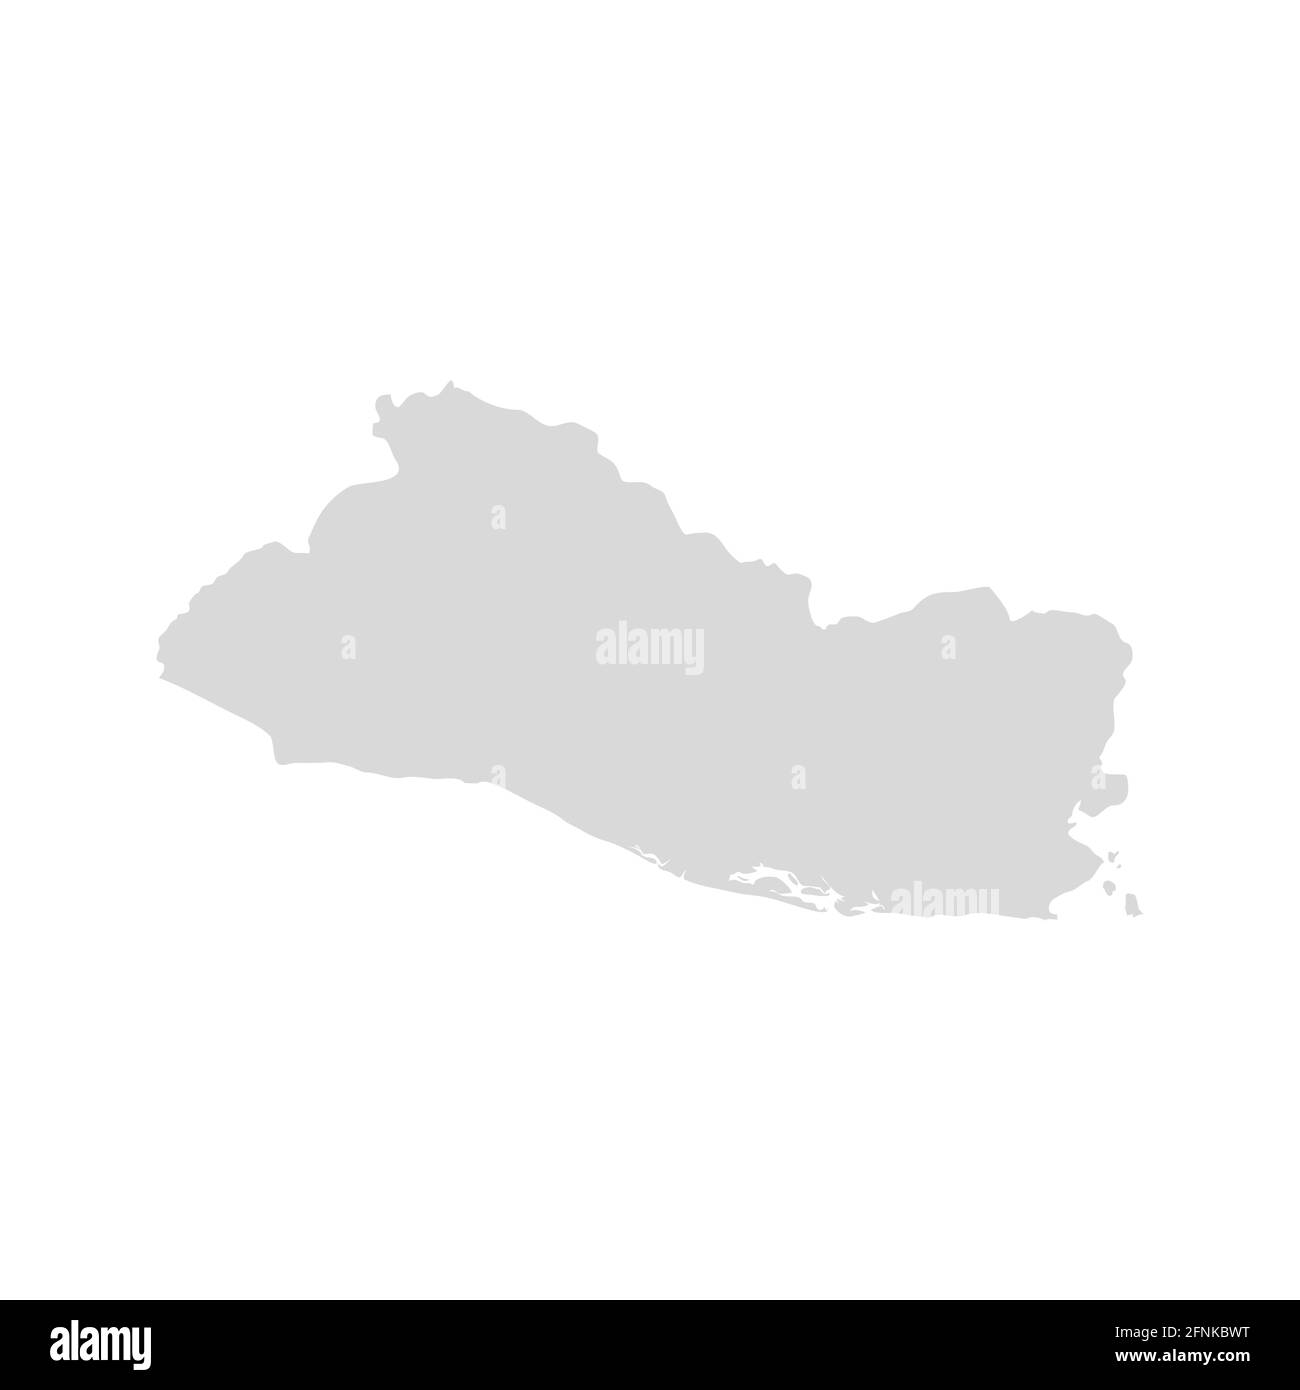 El Salvador country vector map shape illustration Stock Vector